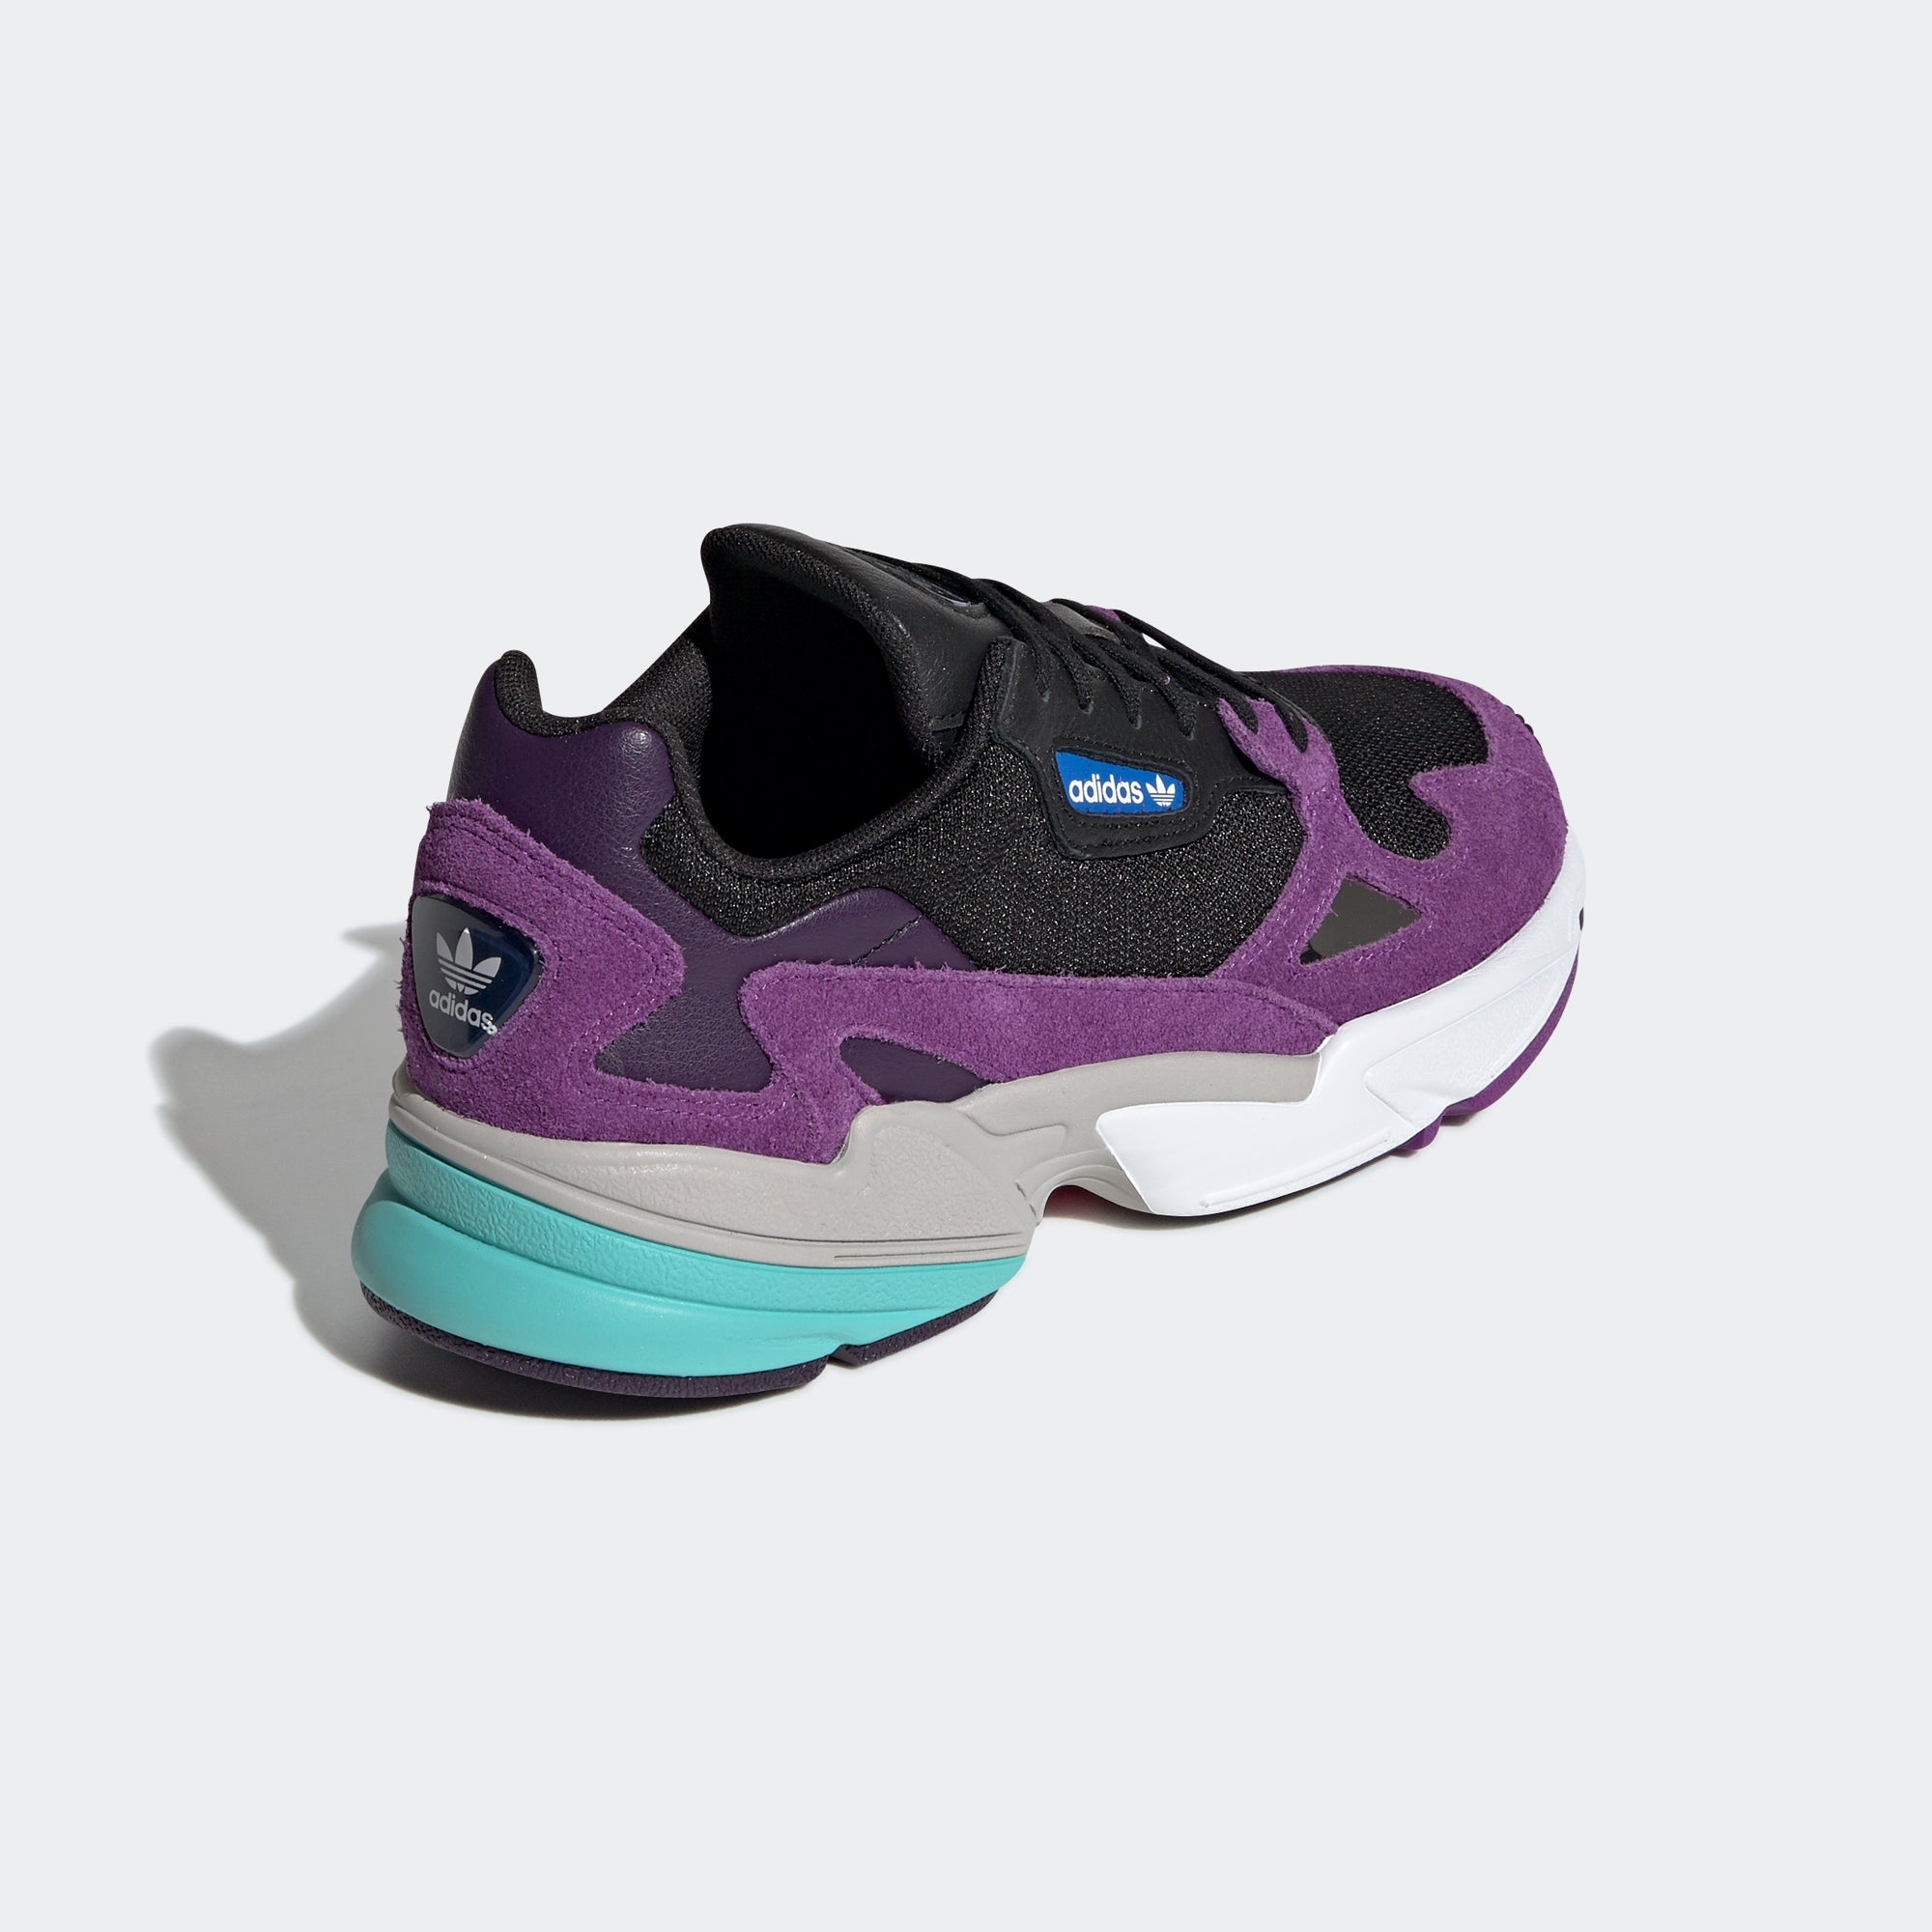 adidas falcon shoes purple